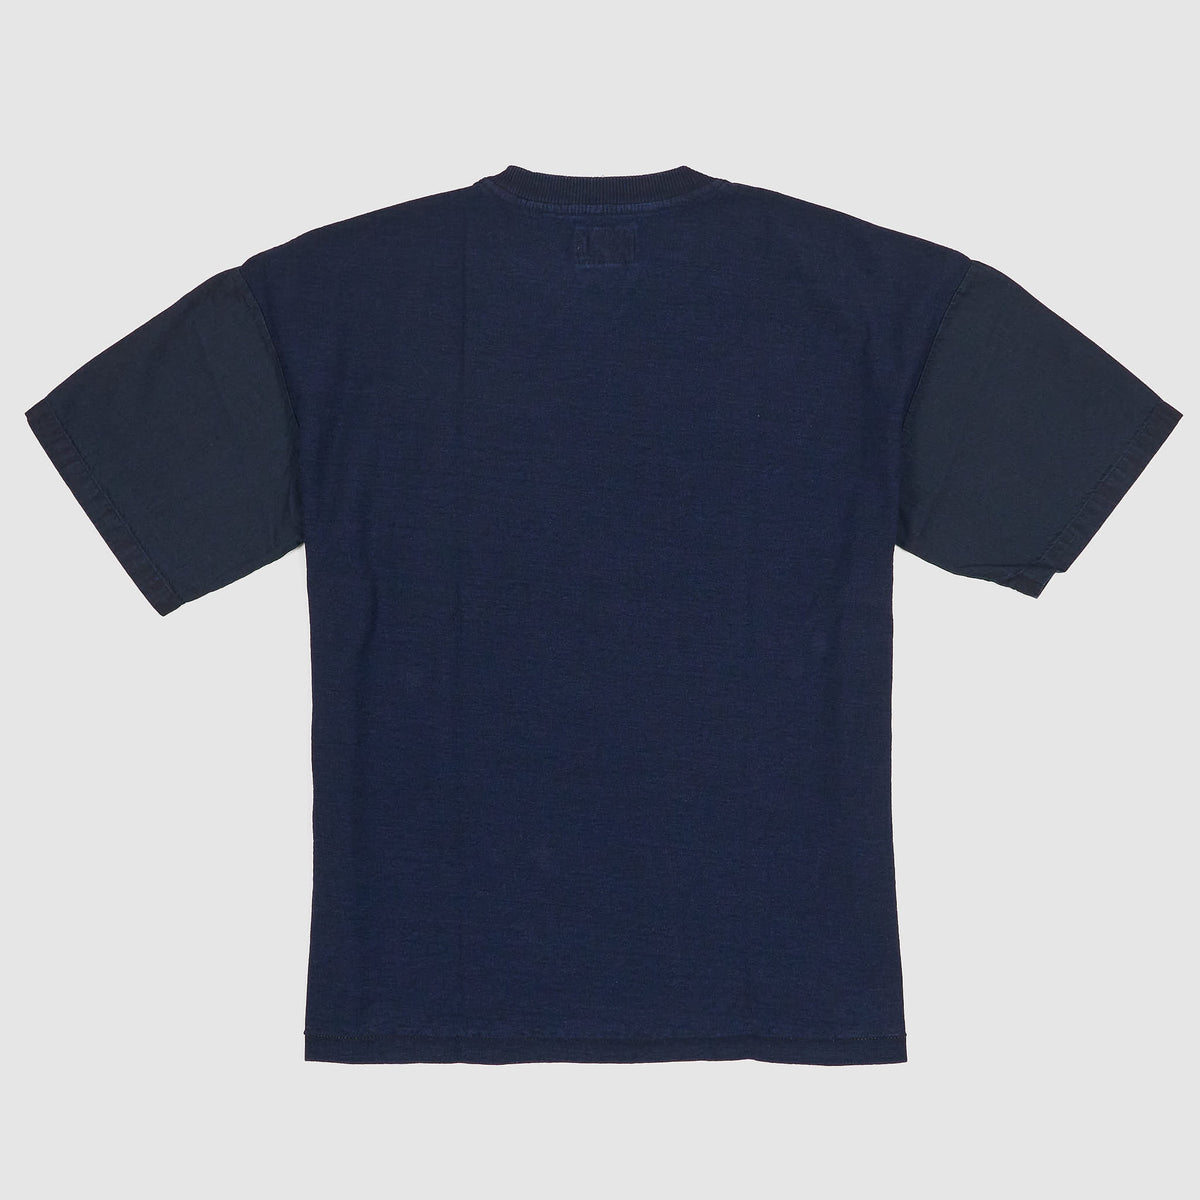 KRM Short Sleeve Sashiko Stitched Pocket Crew Neck T-Shirt